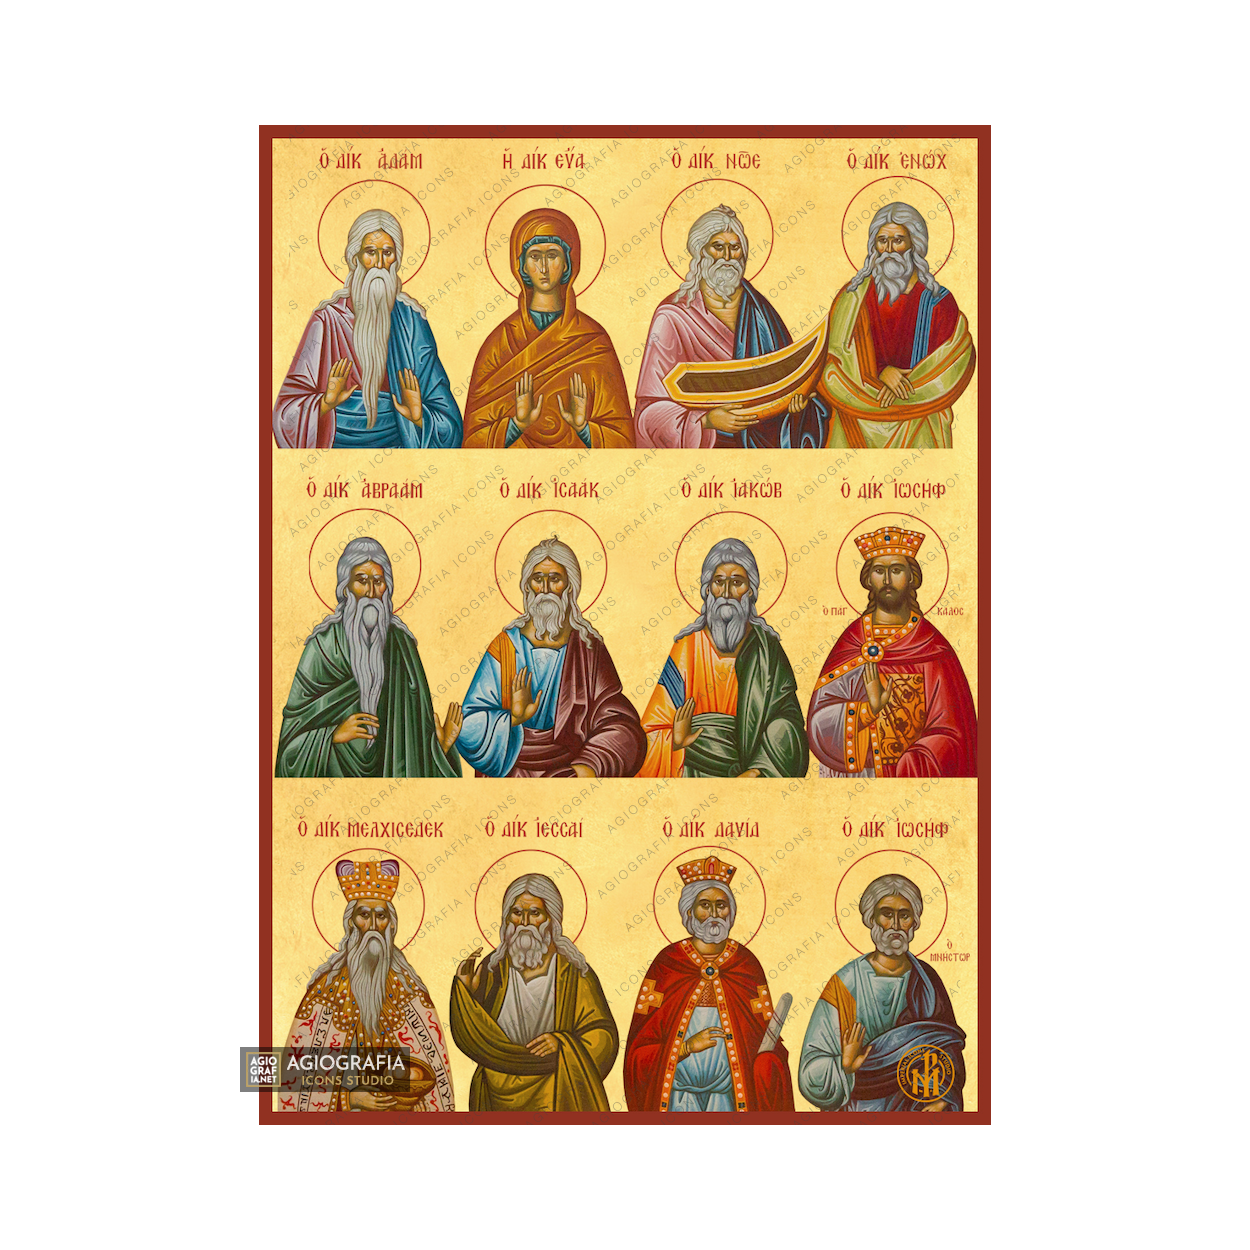 22k Ancestors of Christ - Exclusive Mt Athos Gold Leaf Orthodox Icon